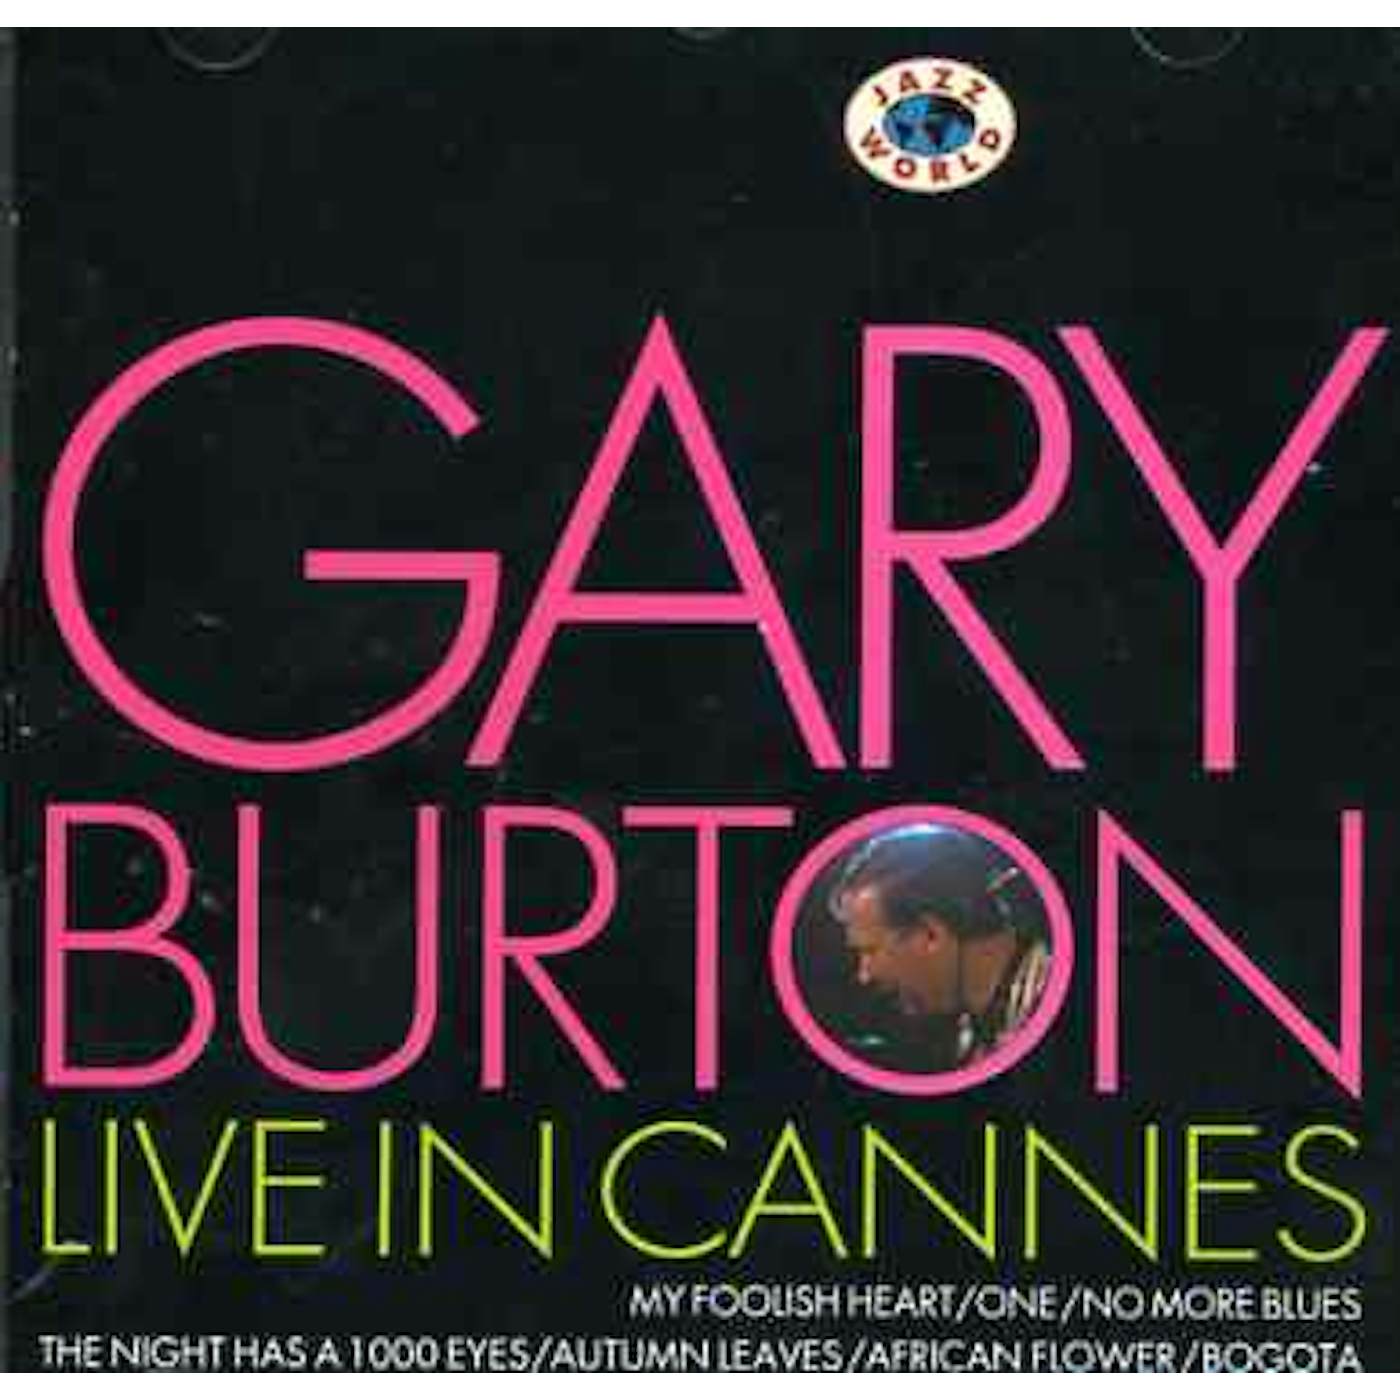 Gary Burton LIVE IN CANNES CD